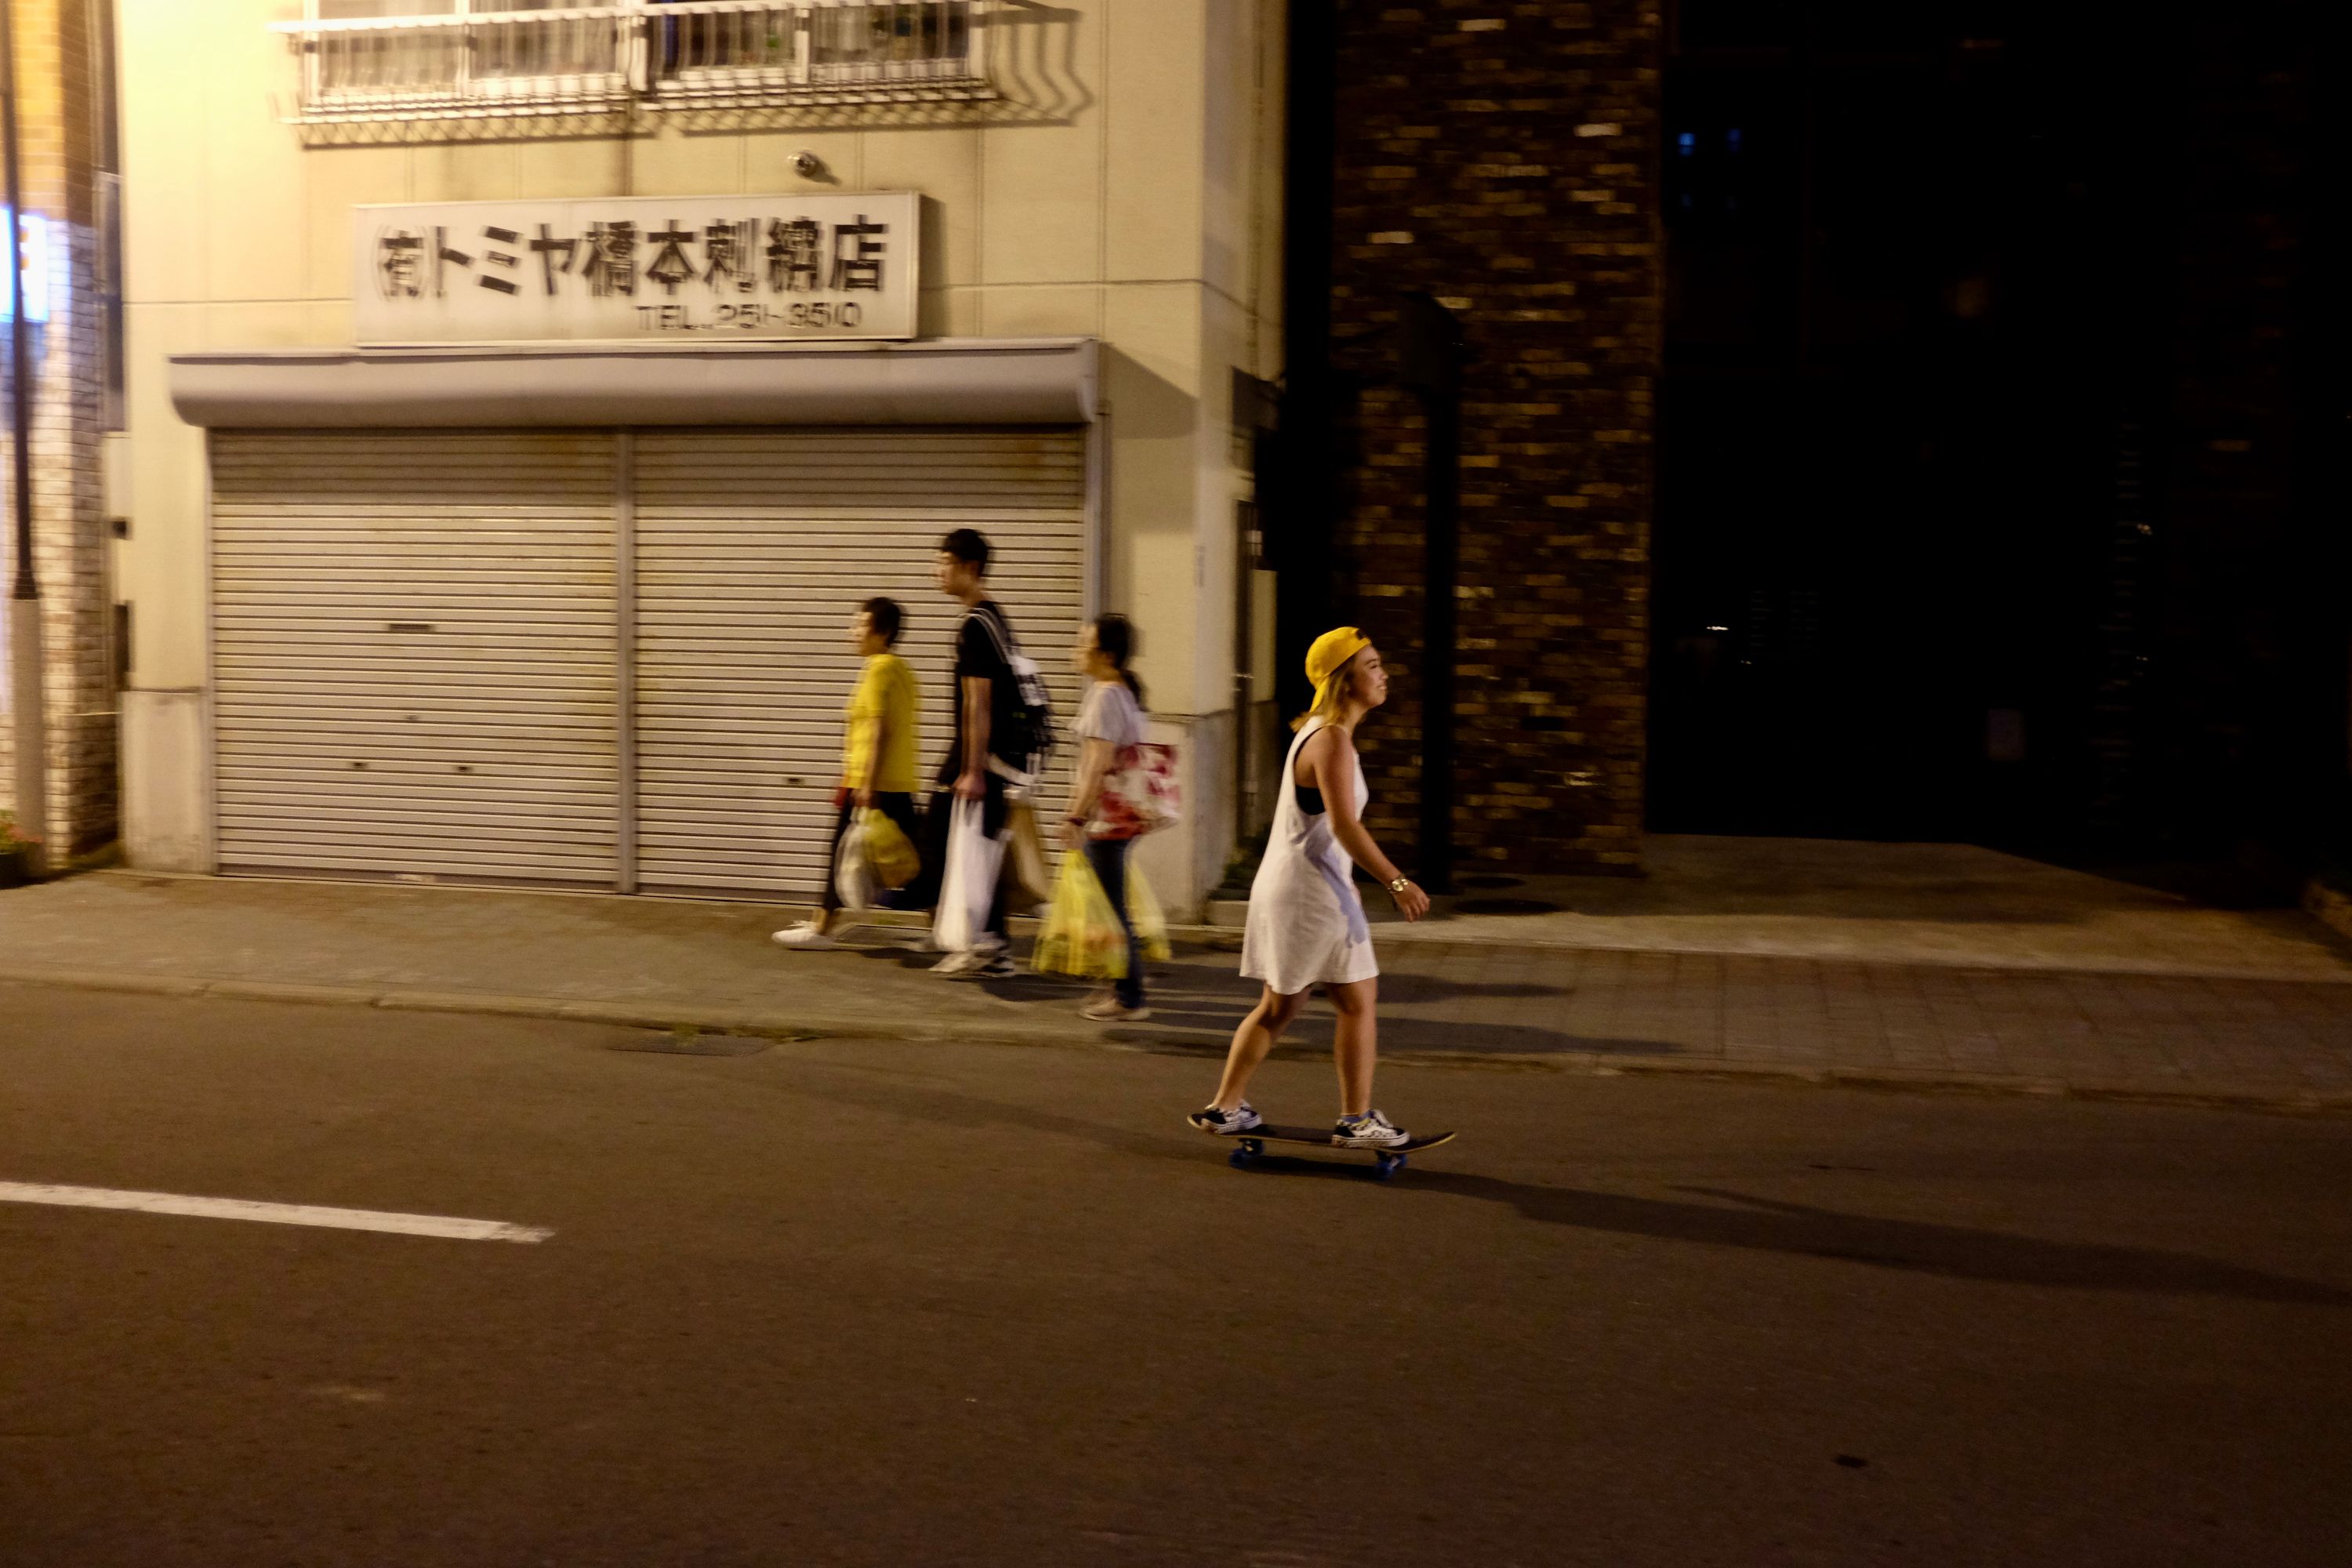 A Japanese girl in a yellow cap rides a skateboard down a street.